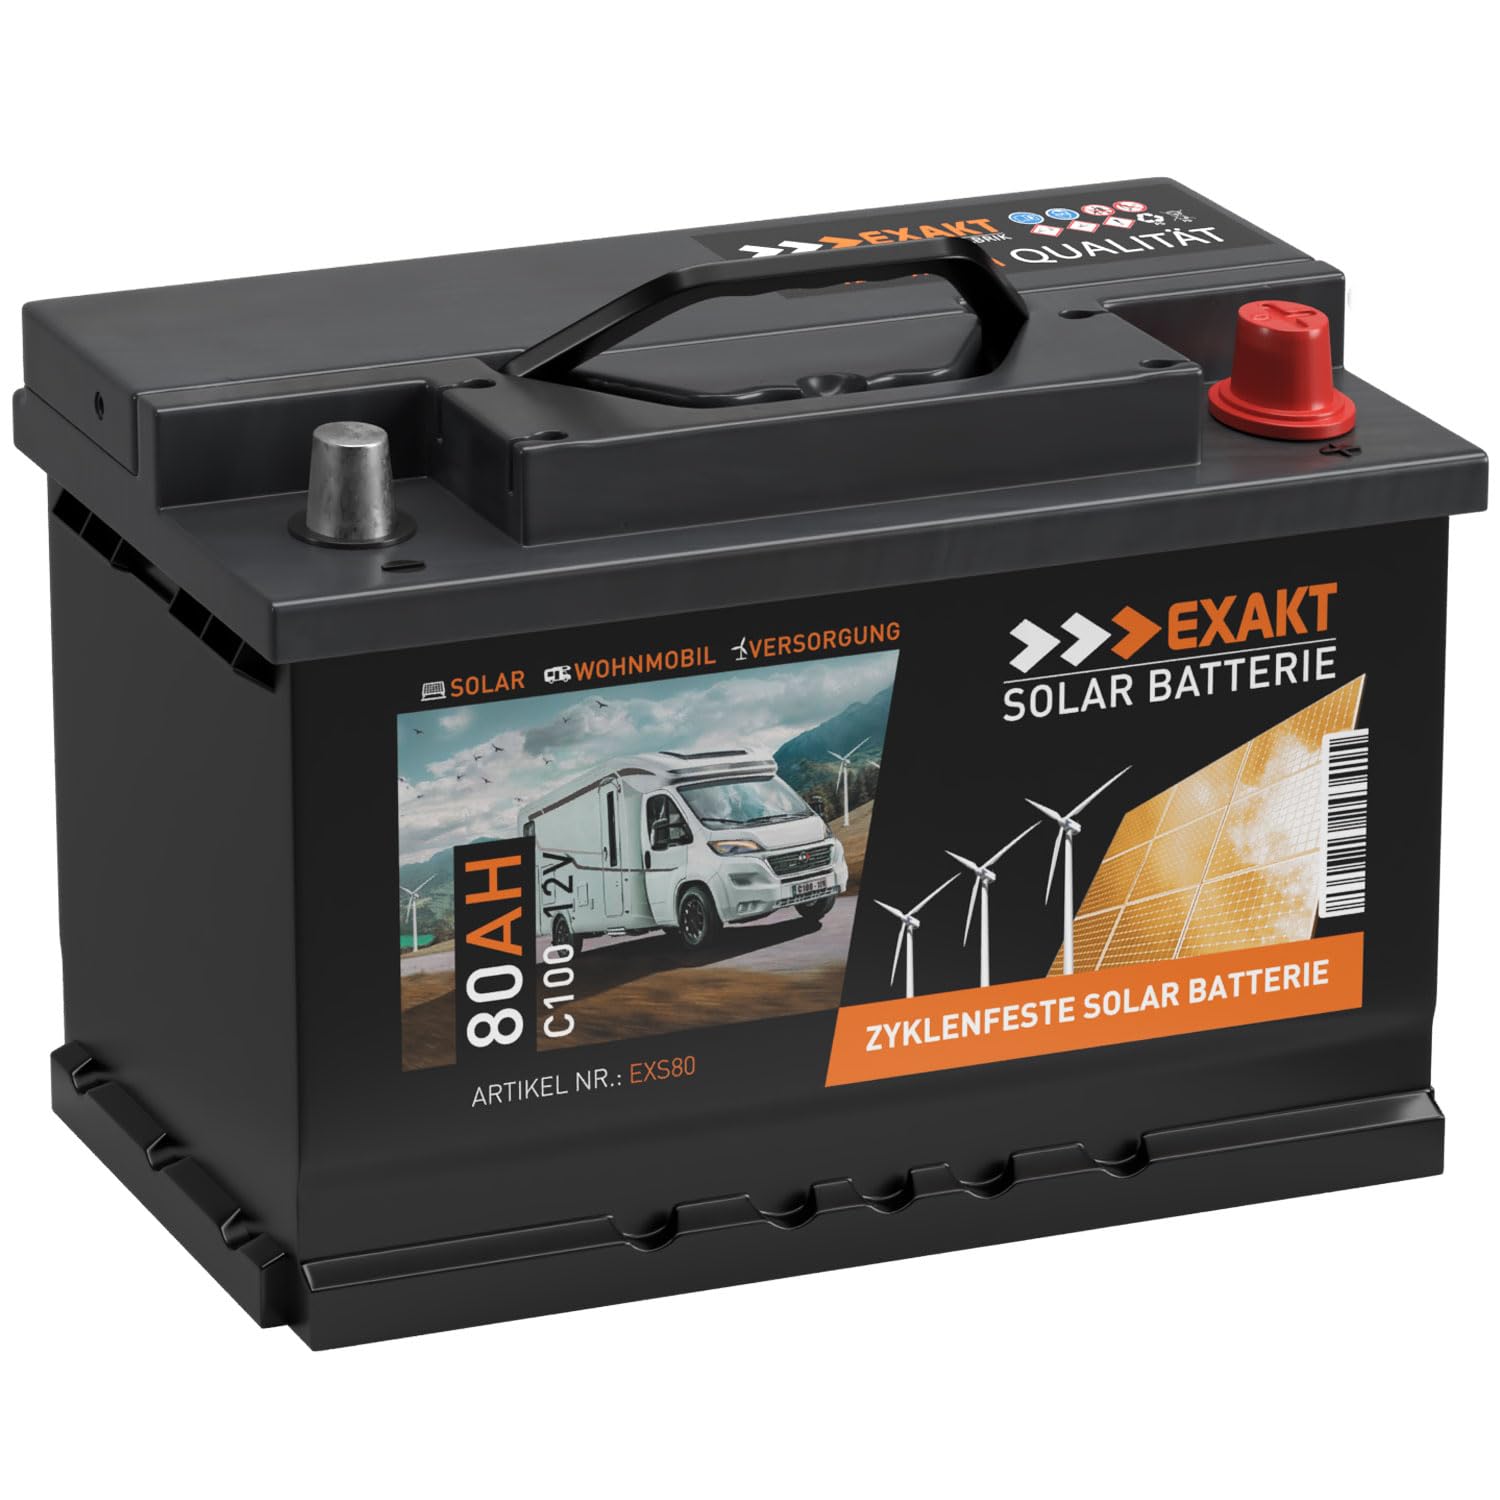 EXAKT Solarbatterie 12V 80Ah Wohnmobil Boot Antrieb Versorgung Mover Photovoltaik Windkraft Batterie ersetzt 75Ah 70Ah